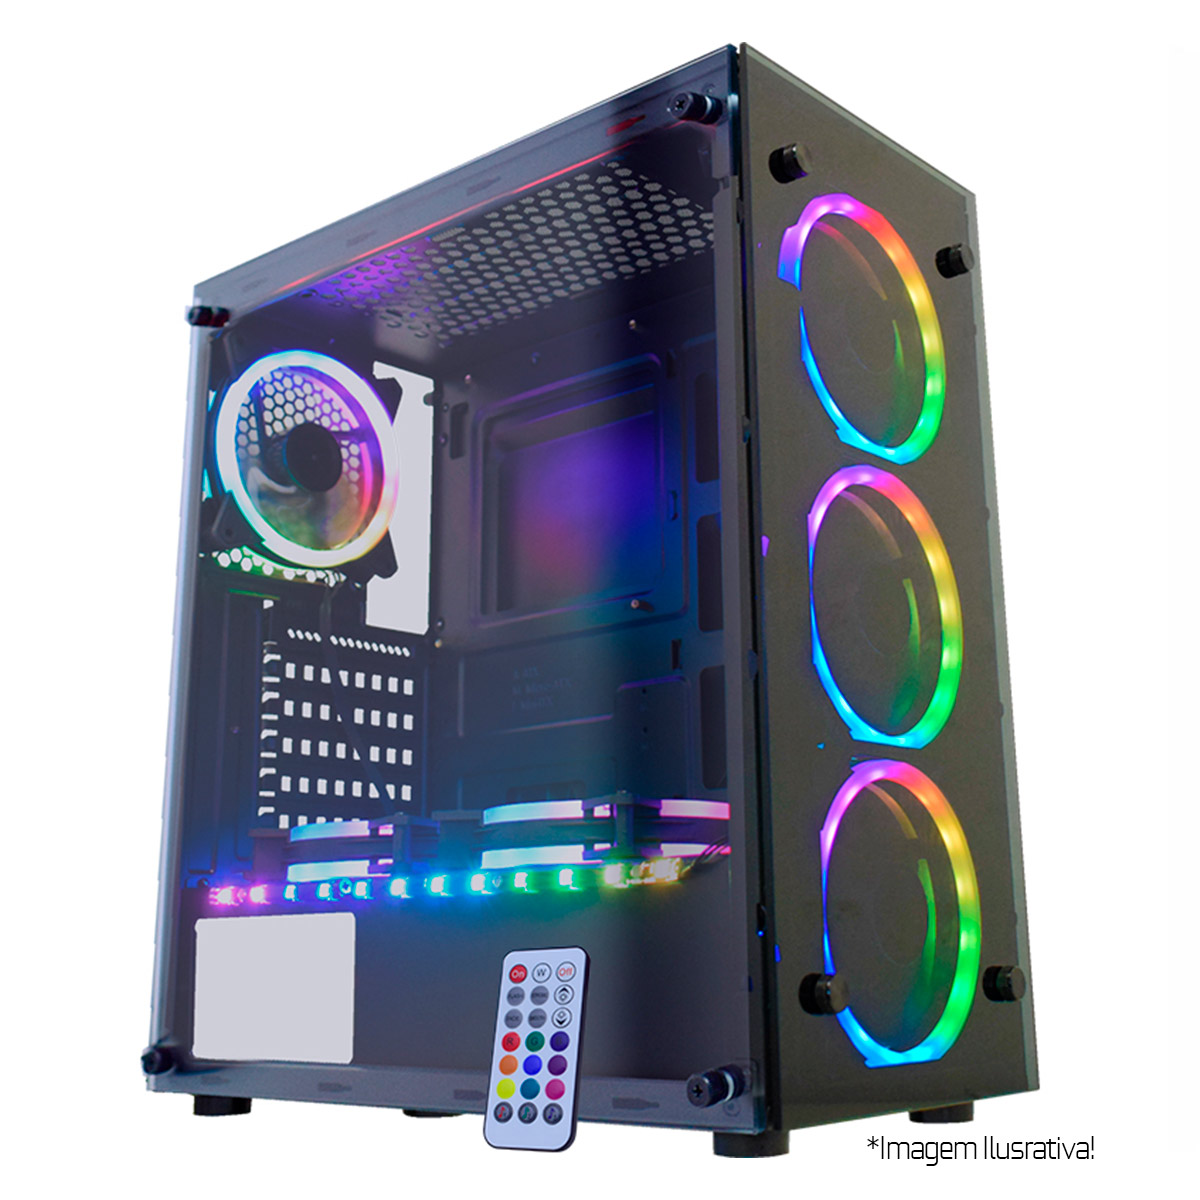 Gabinete Gamer K-Mex Atlantis ll - Painel Frontal e Lateral em Vidro Temperado - com Coolers e Fita LED RGB Rainbow - Controle Remoto - CG-02N9